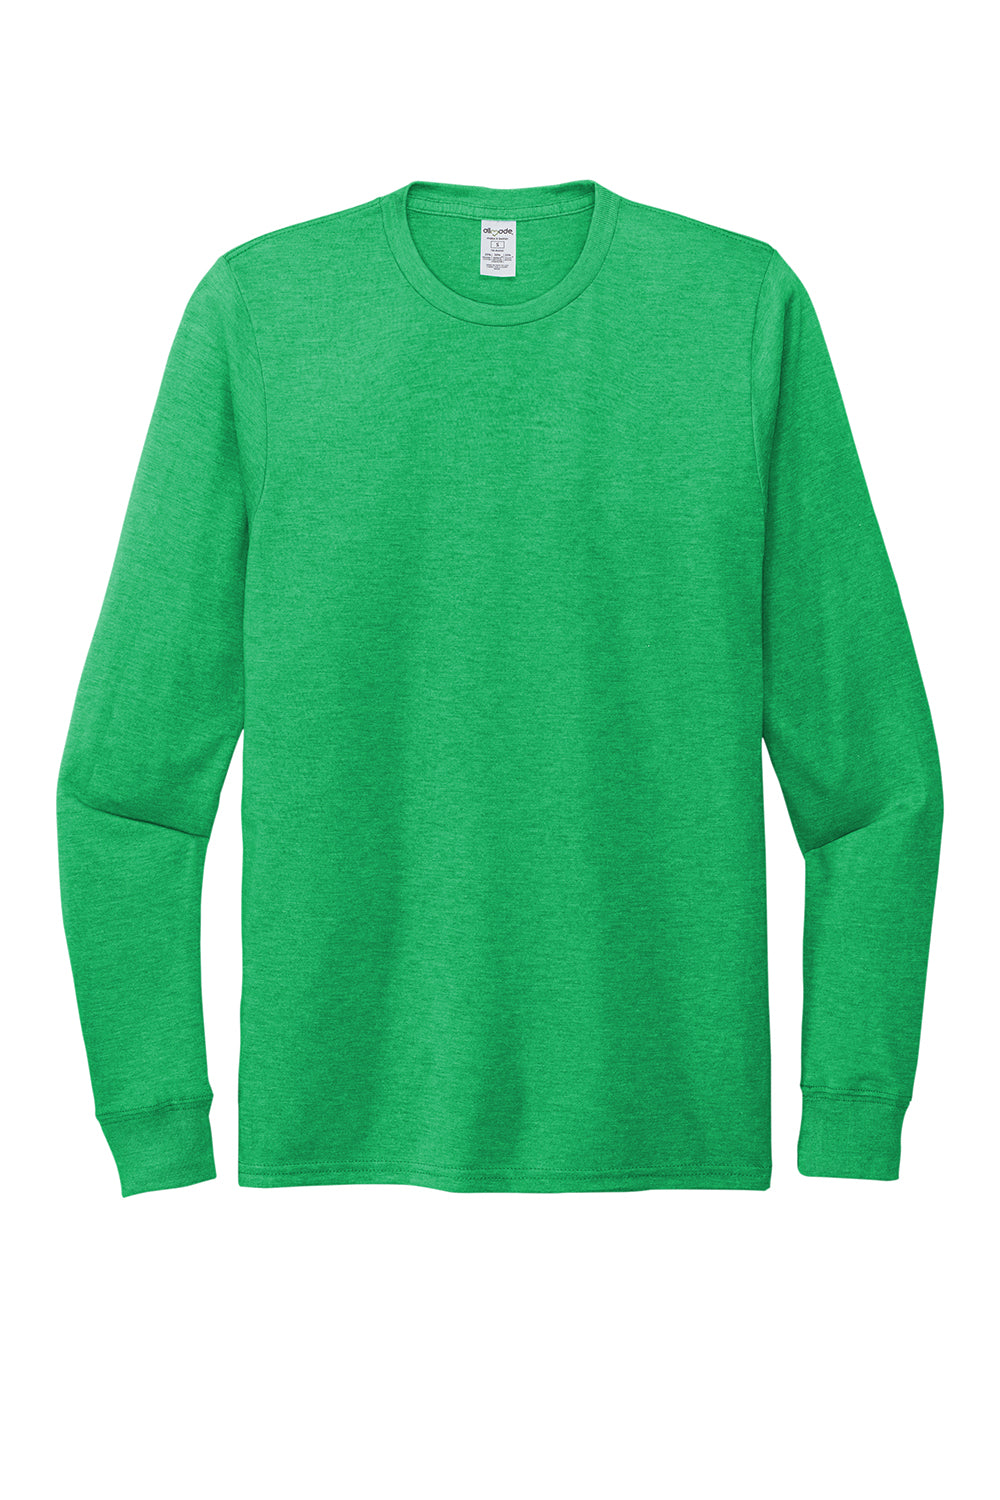 Allmade AL6004 Mens Long Sleeve Crewneck T-Shirt Enviro Green Flat Front